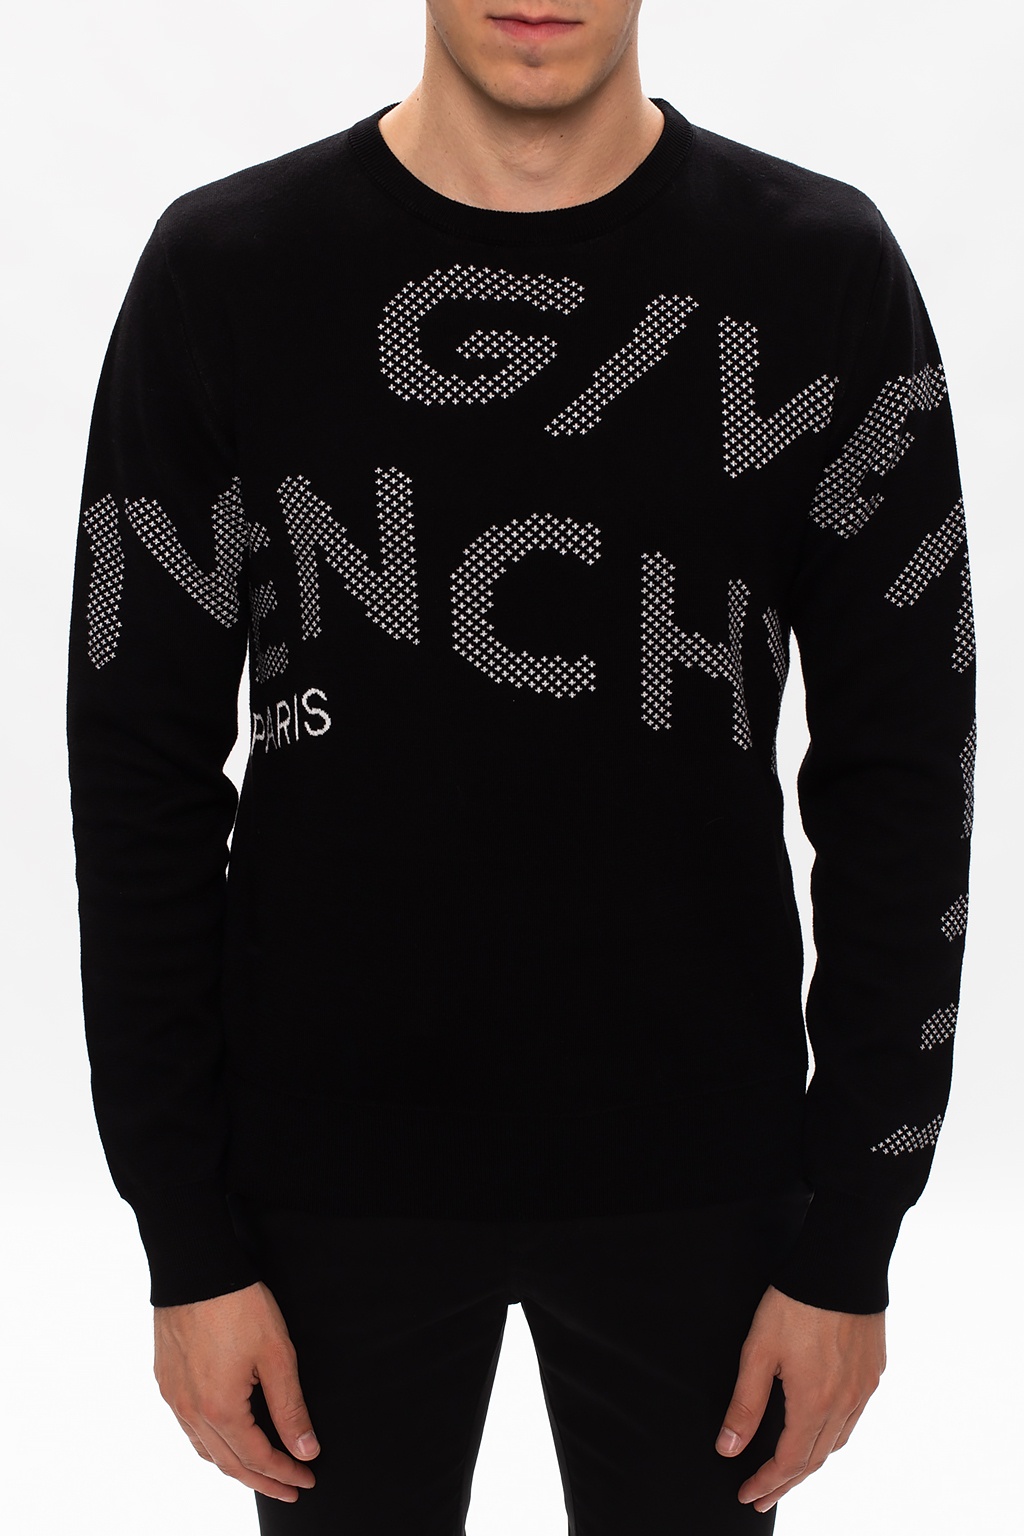 givenchy knit bar logo sweater